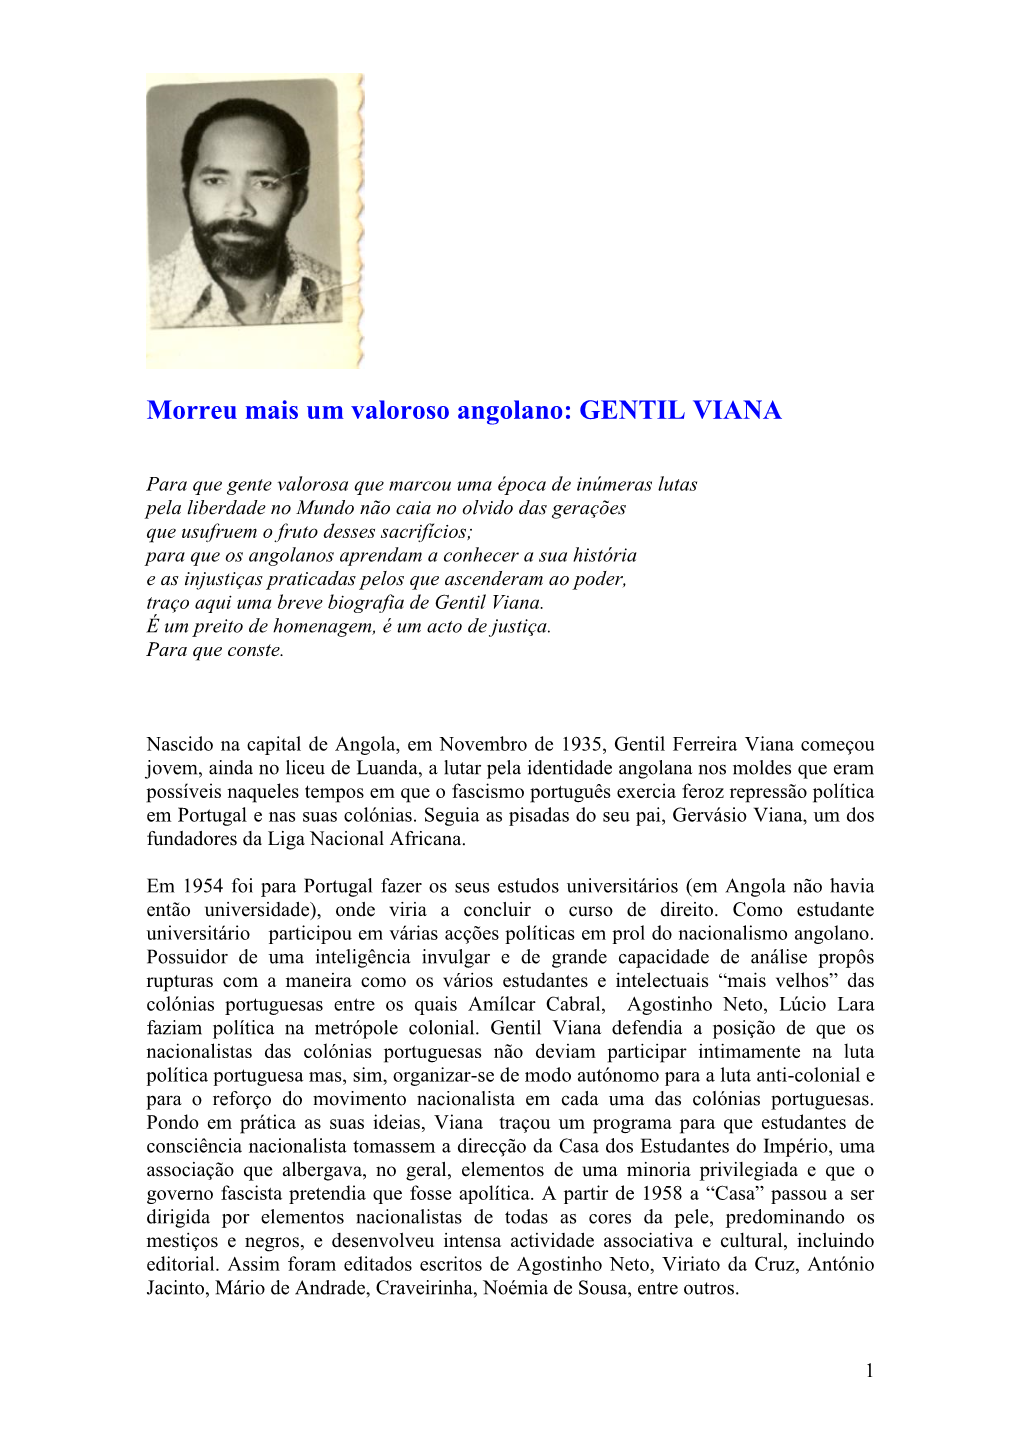 Gentil Viana